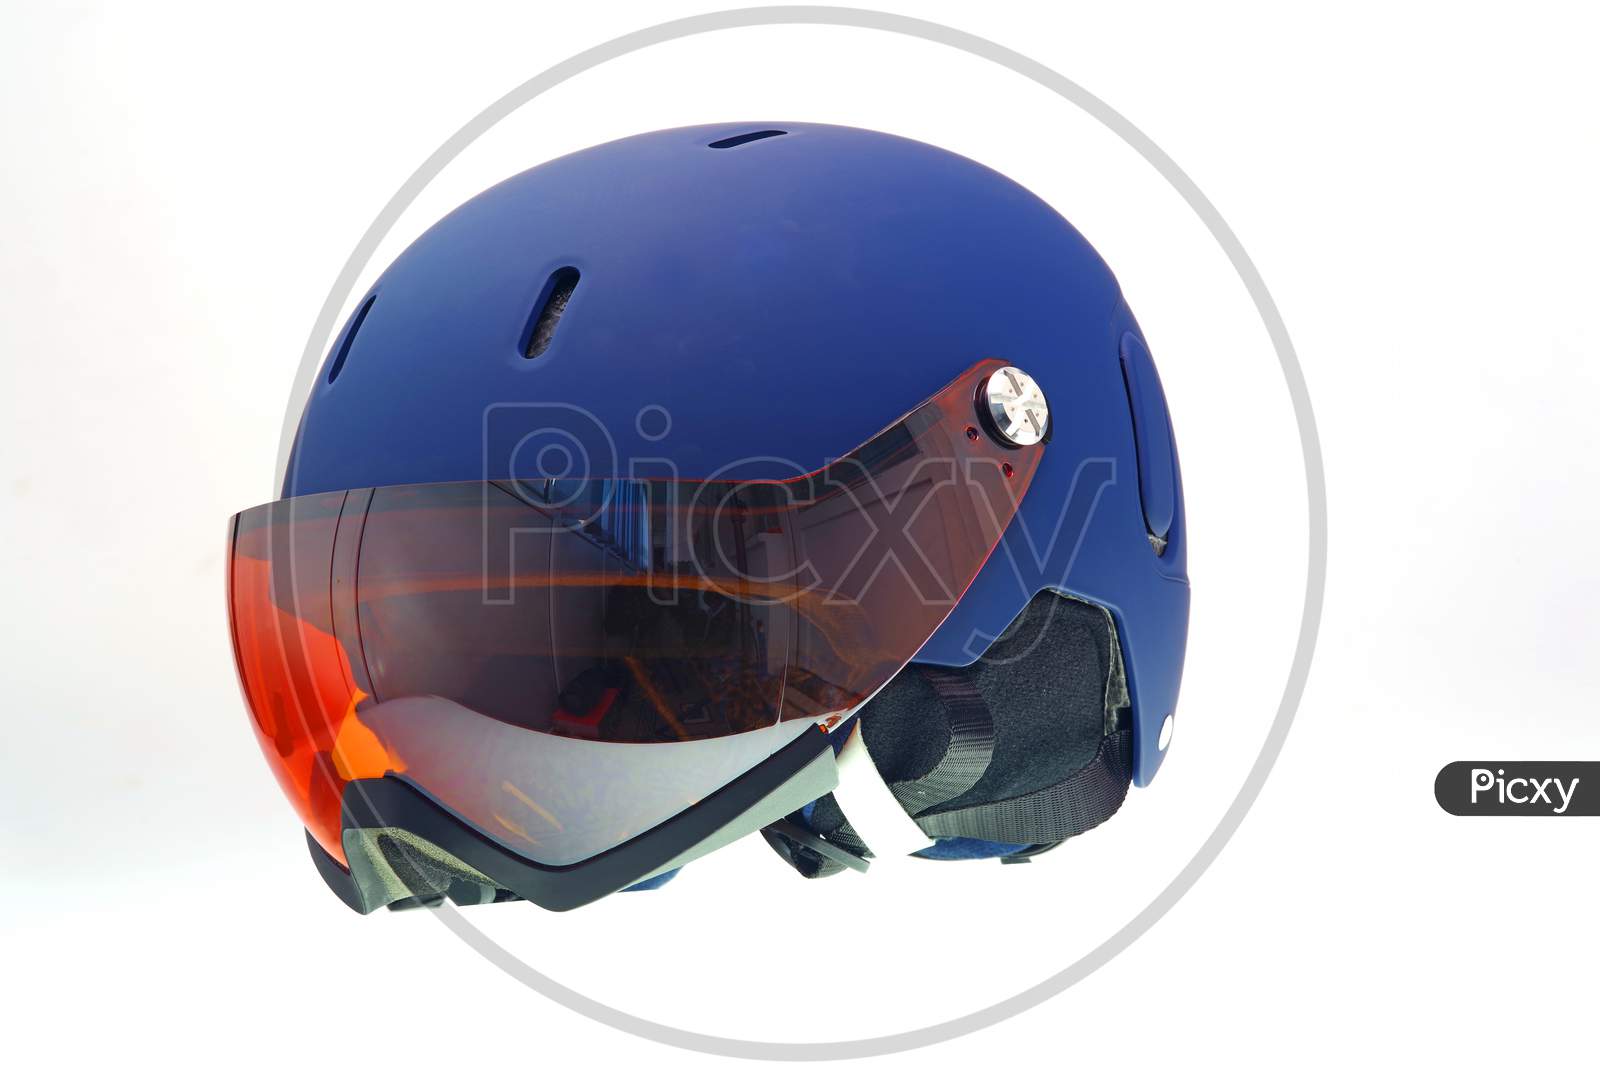 Kids Ski Helmet, Goggles Included